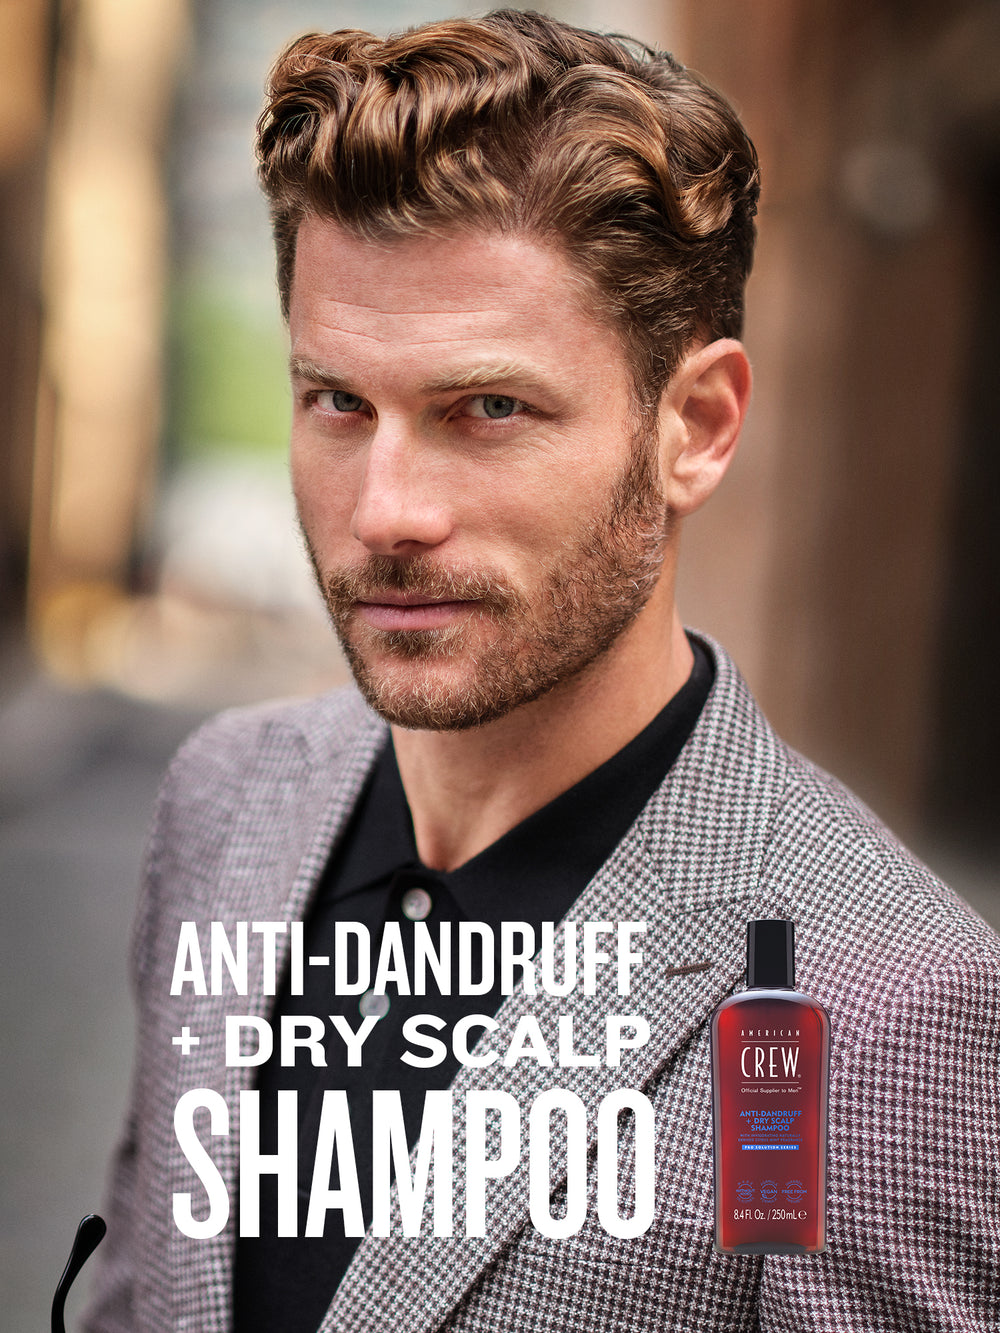 Anti-Dandruff + Dry Scalp Shampoo